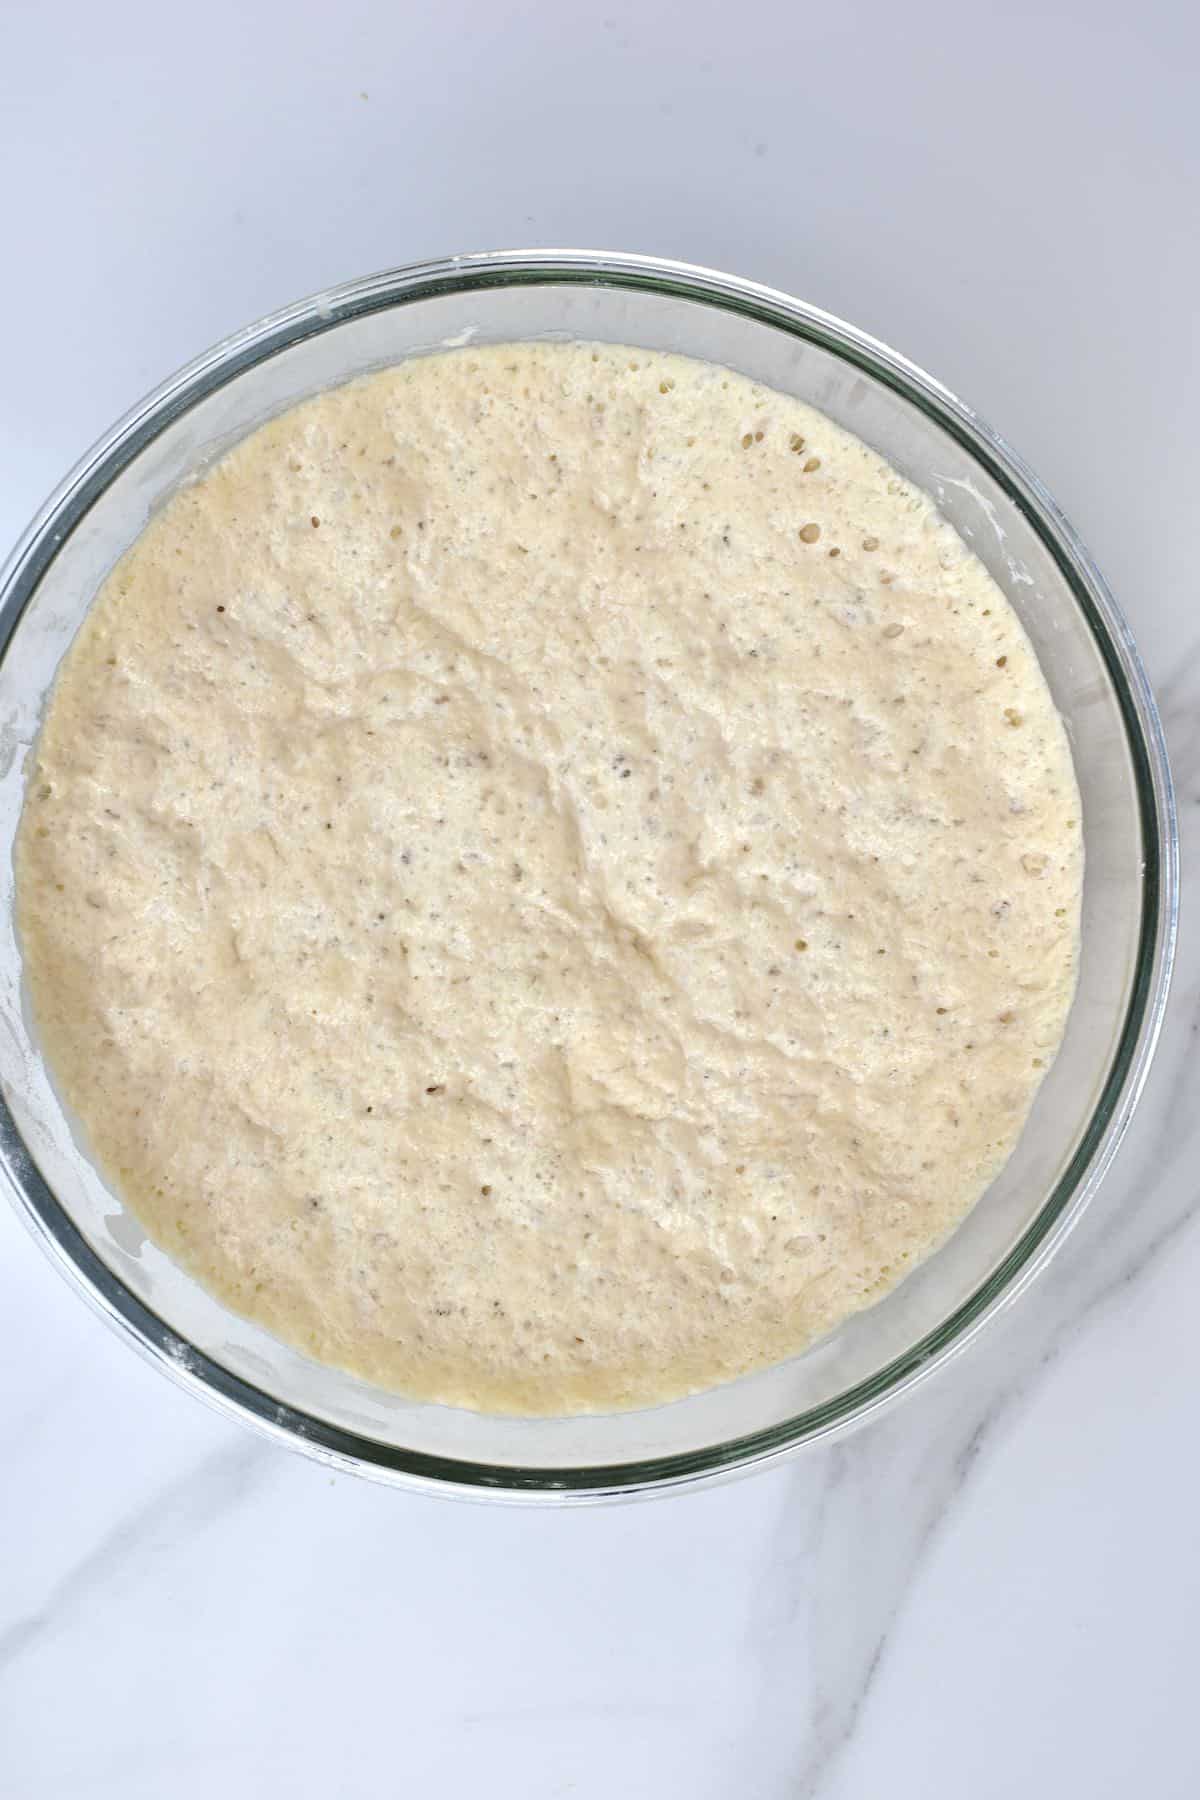 Risen bread dough in a bowl